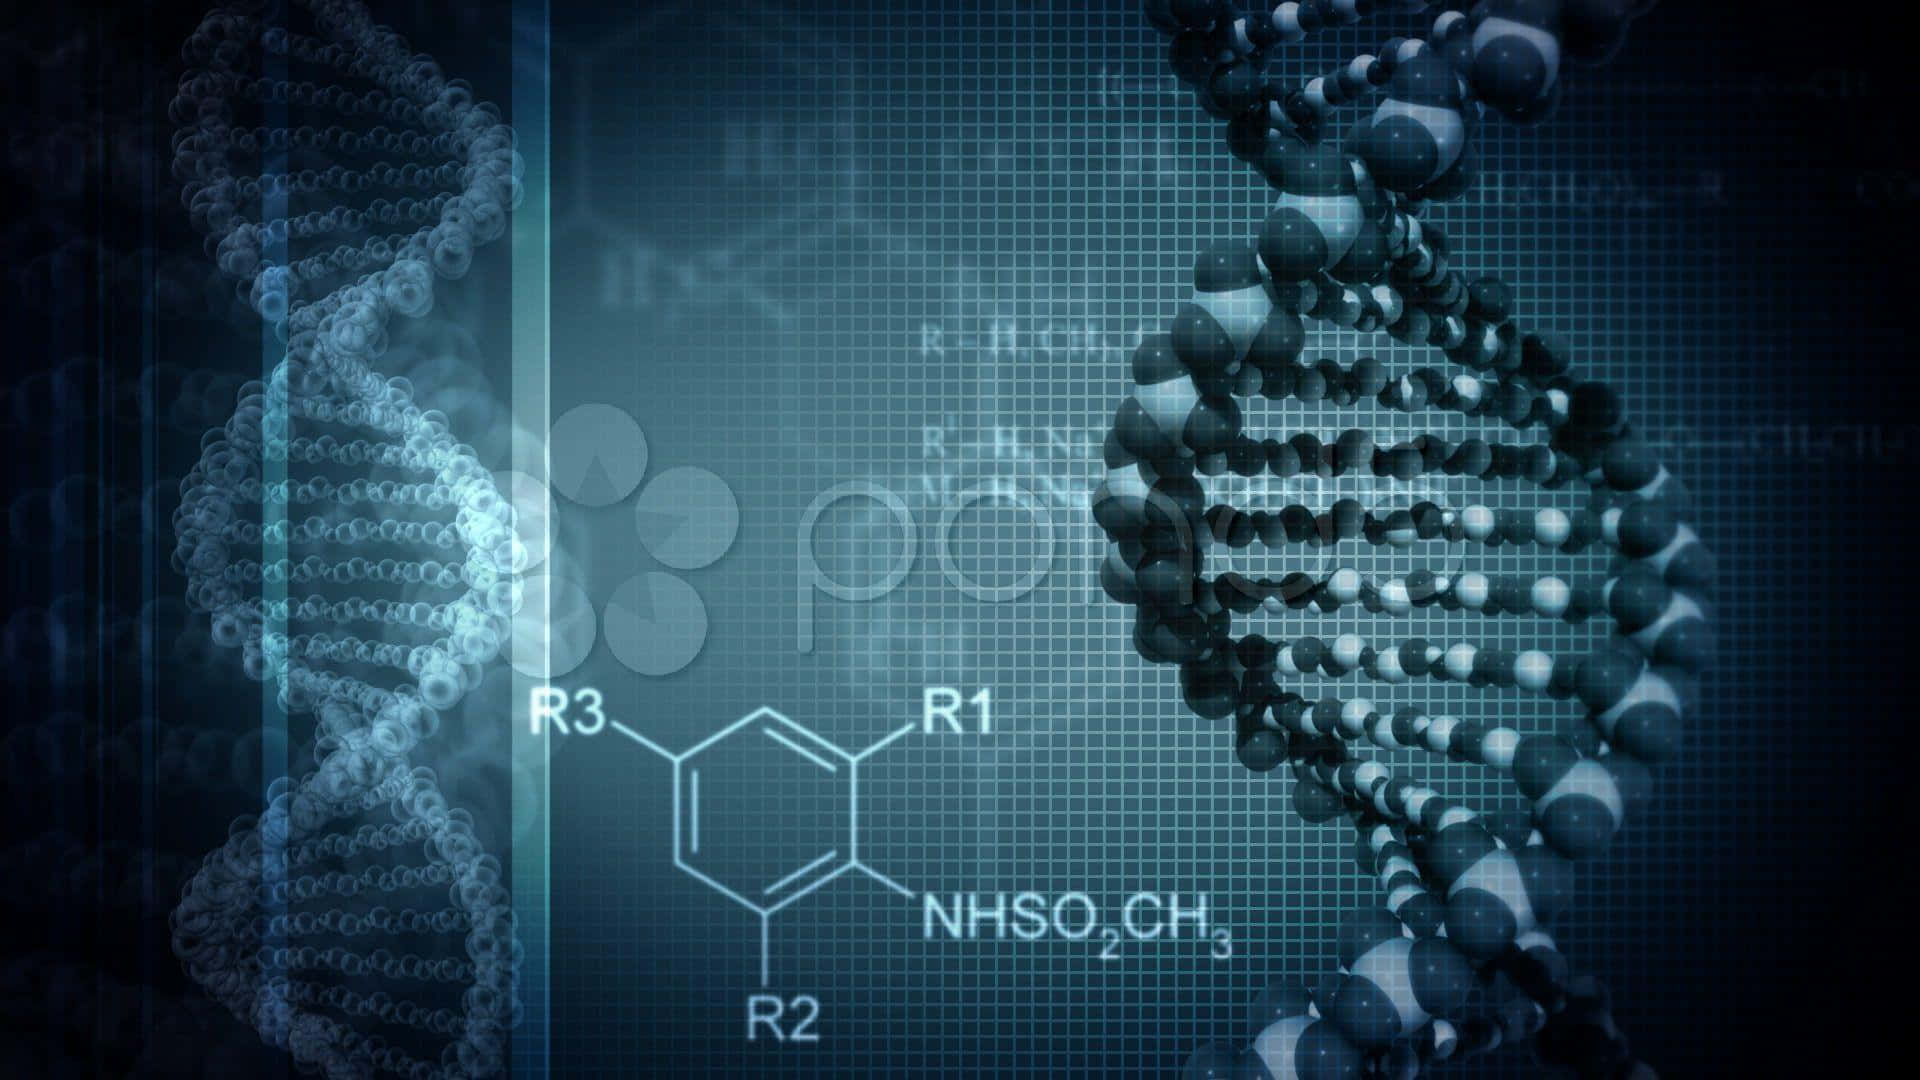 Unlocking the secrets of life through DNA